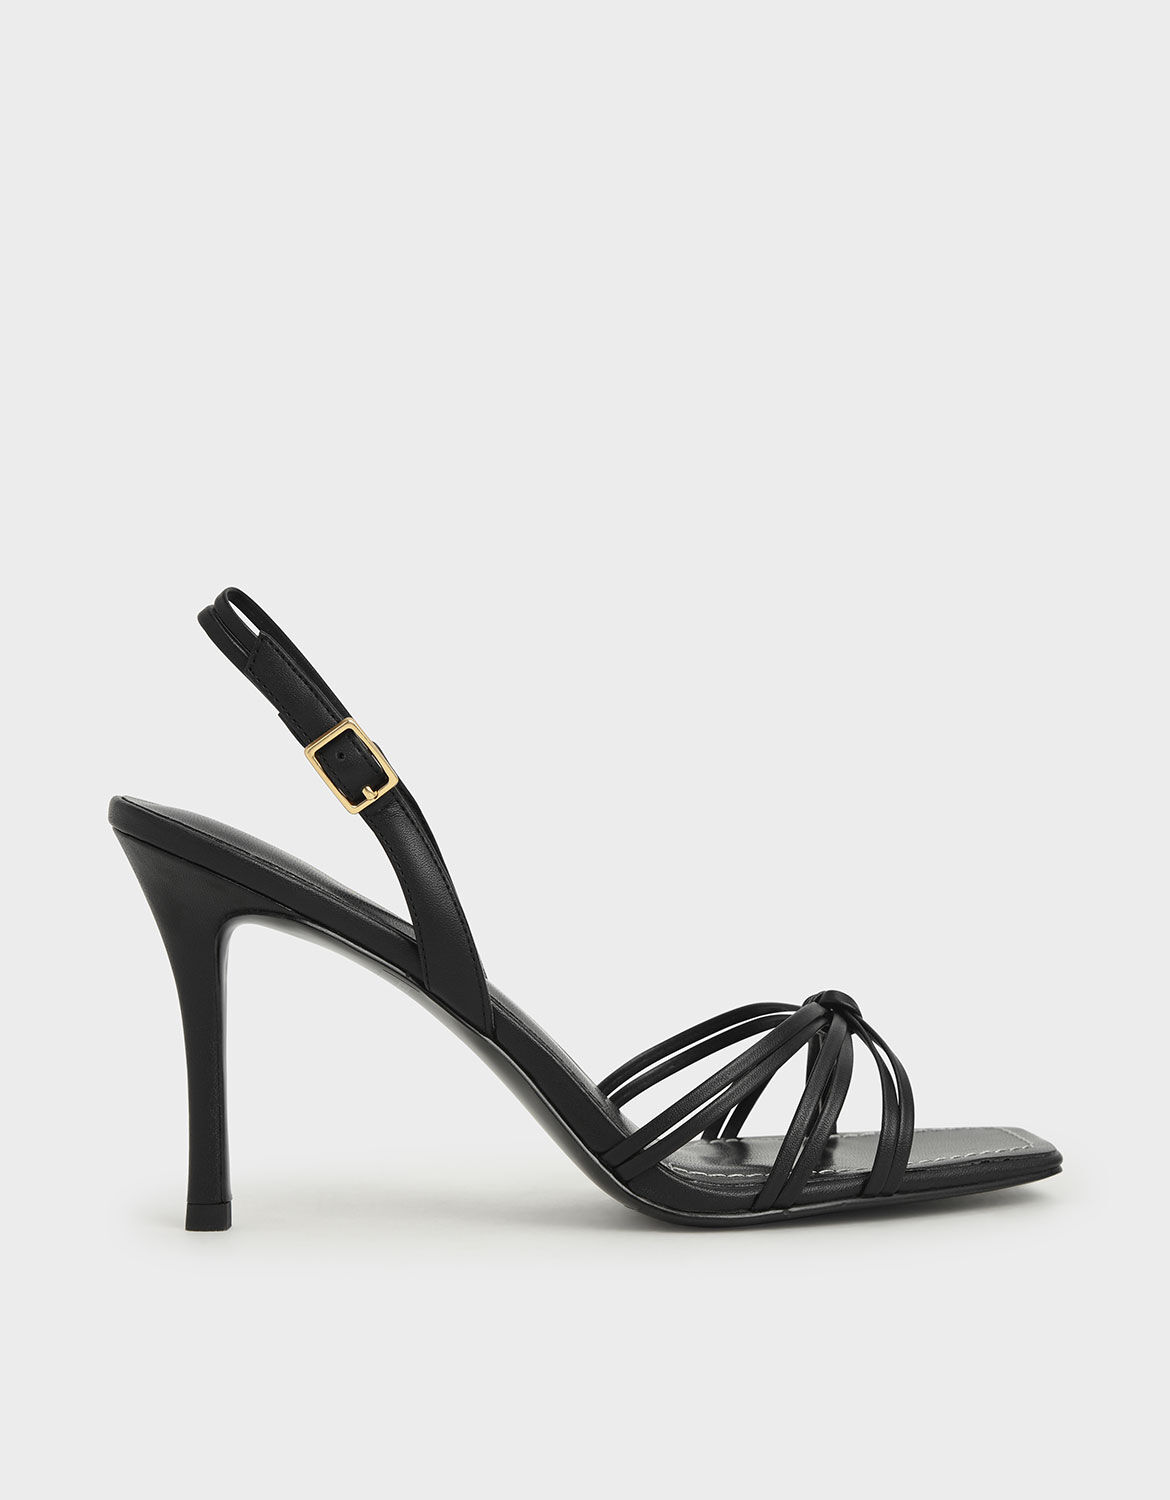 black strappy heels